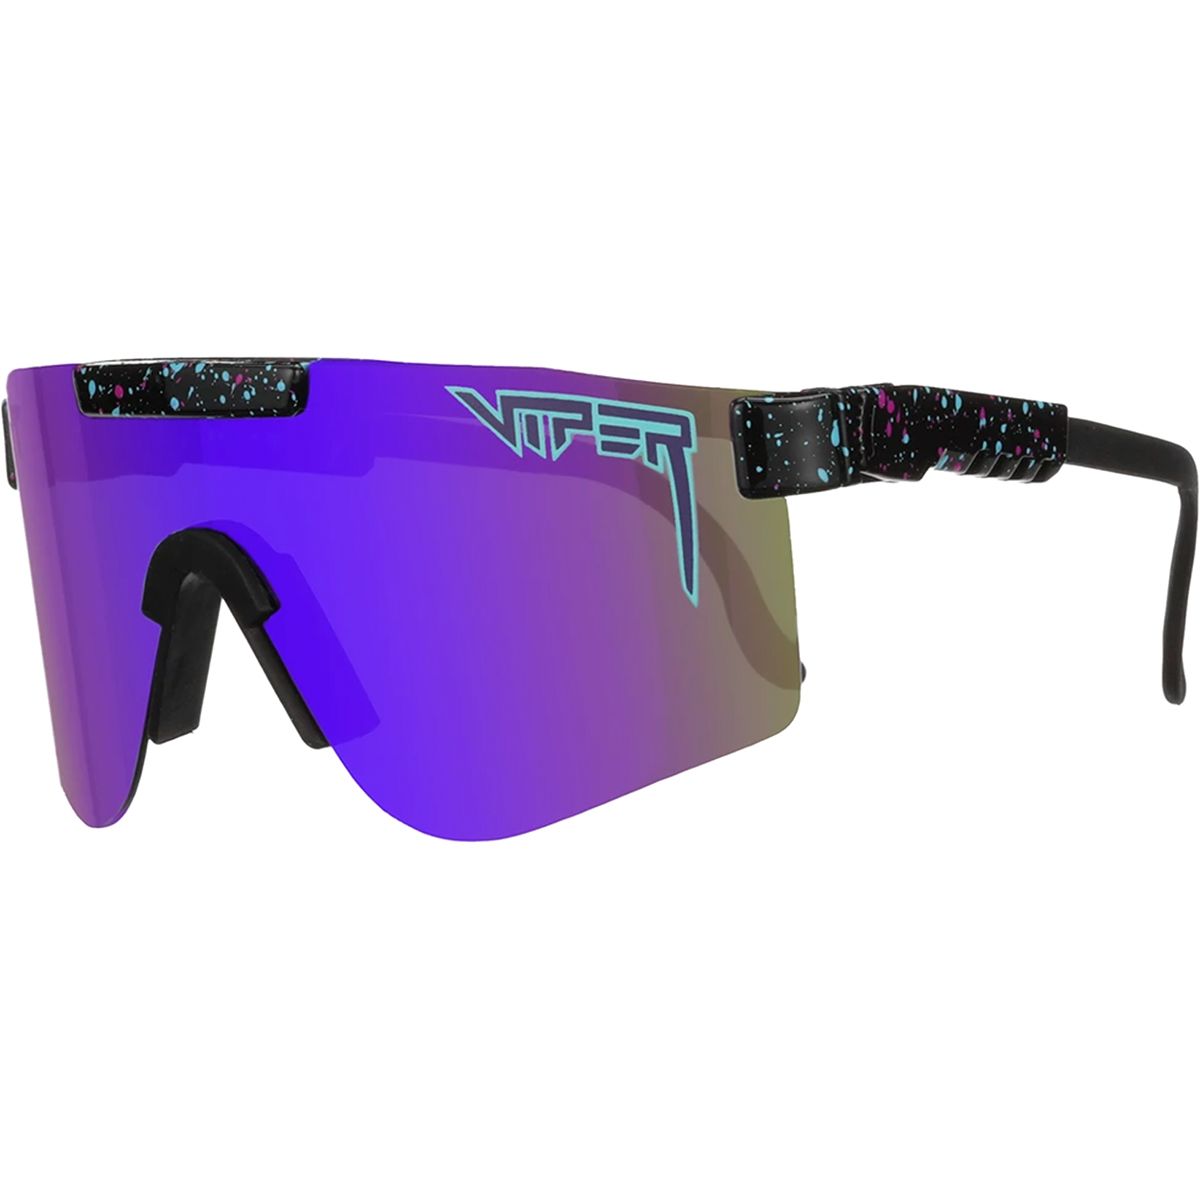 Поляризованные солнцезащитные очки Double Wides Pit Viper